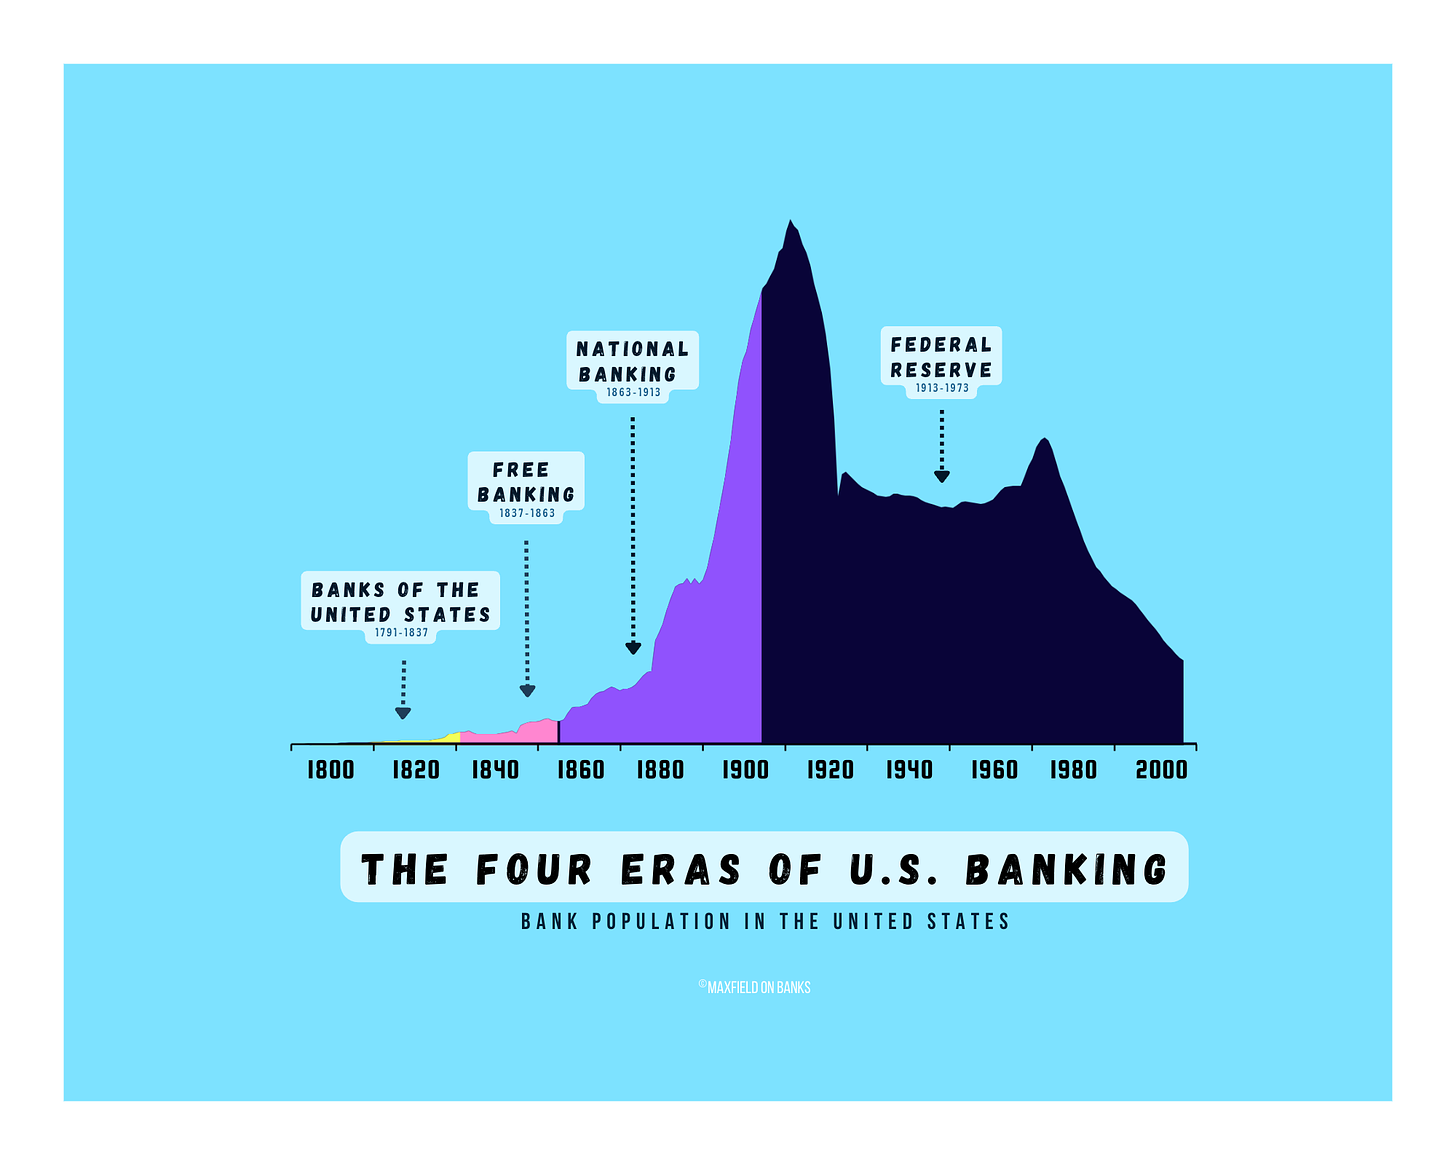 The Four Era's of U.S. Banking